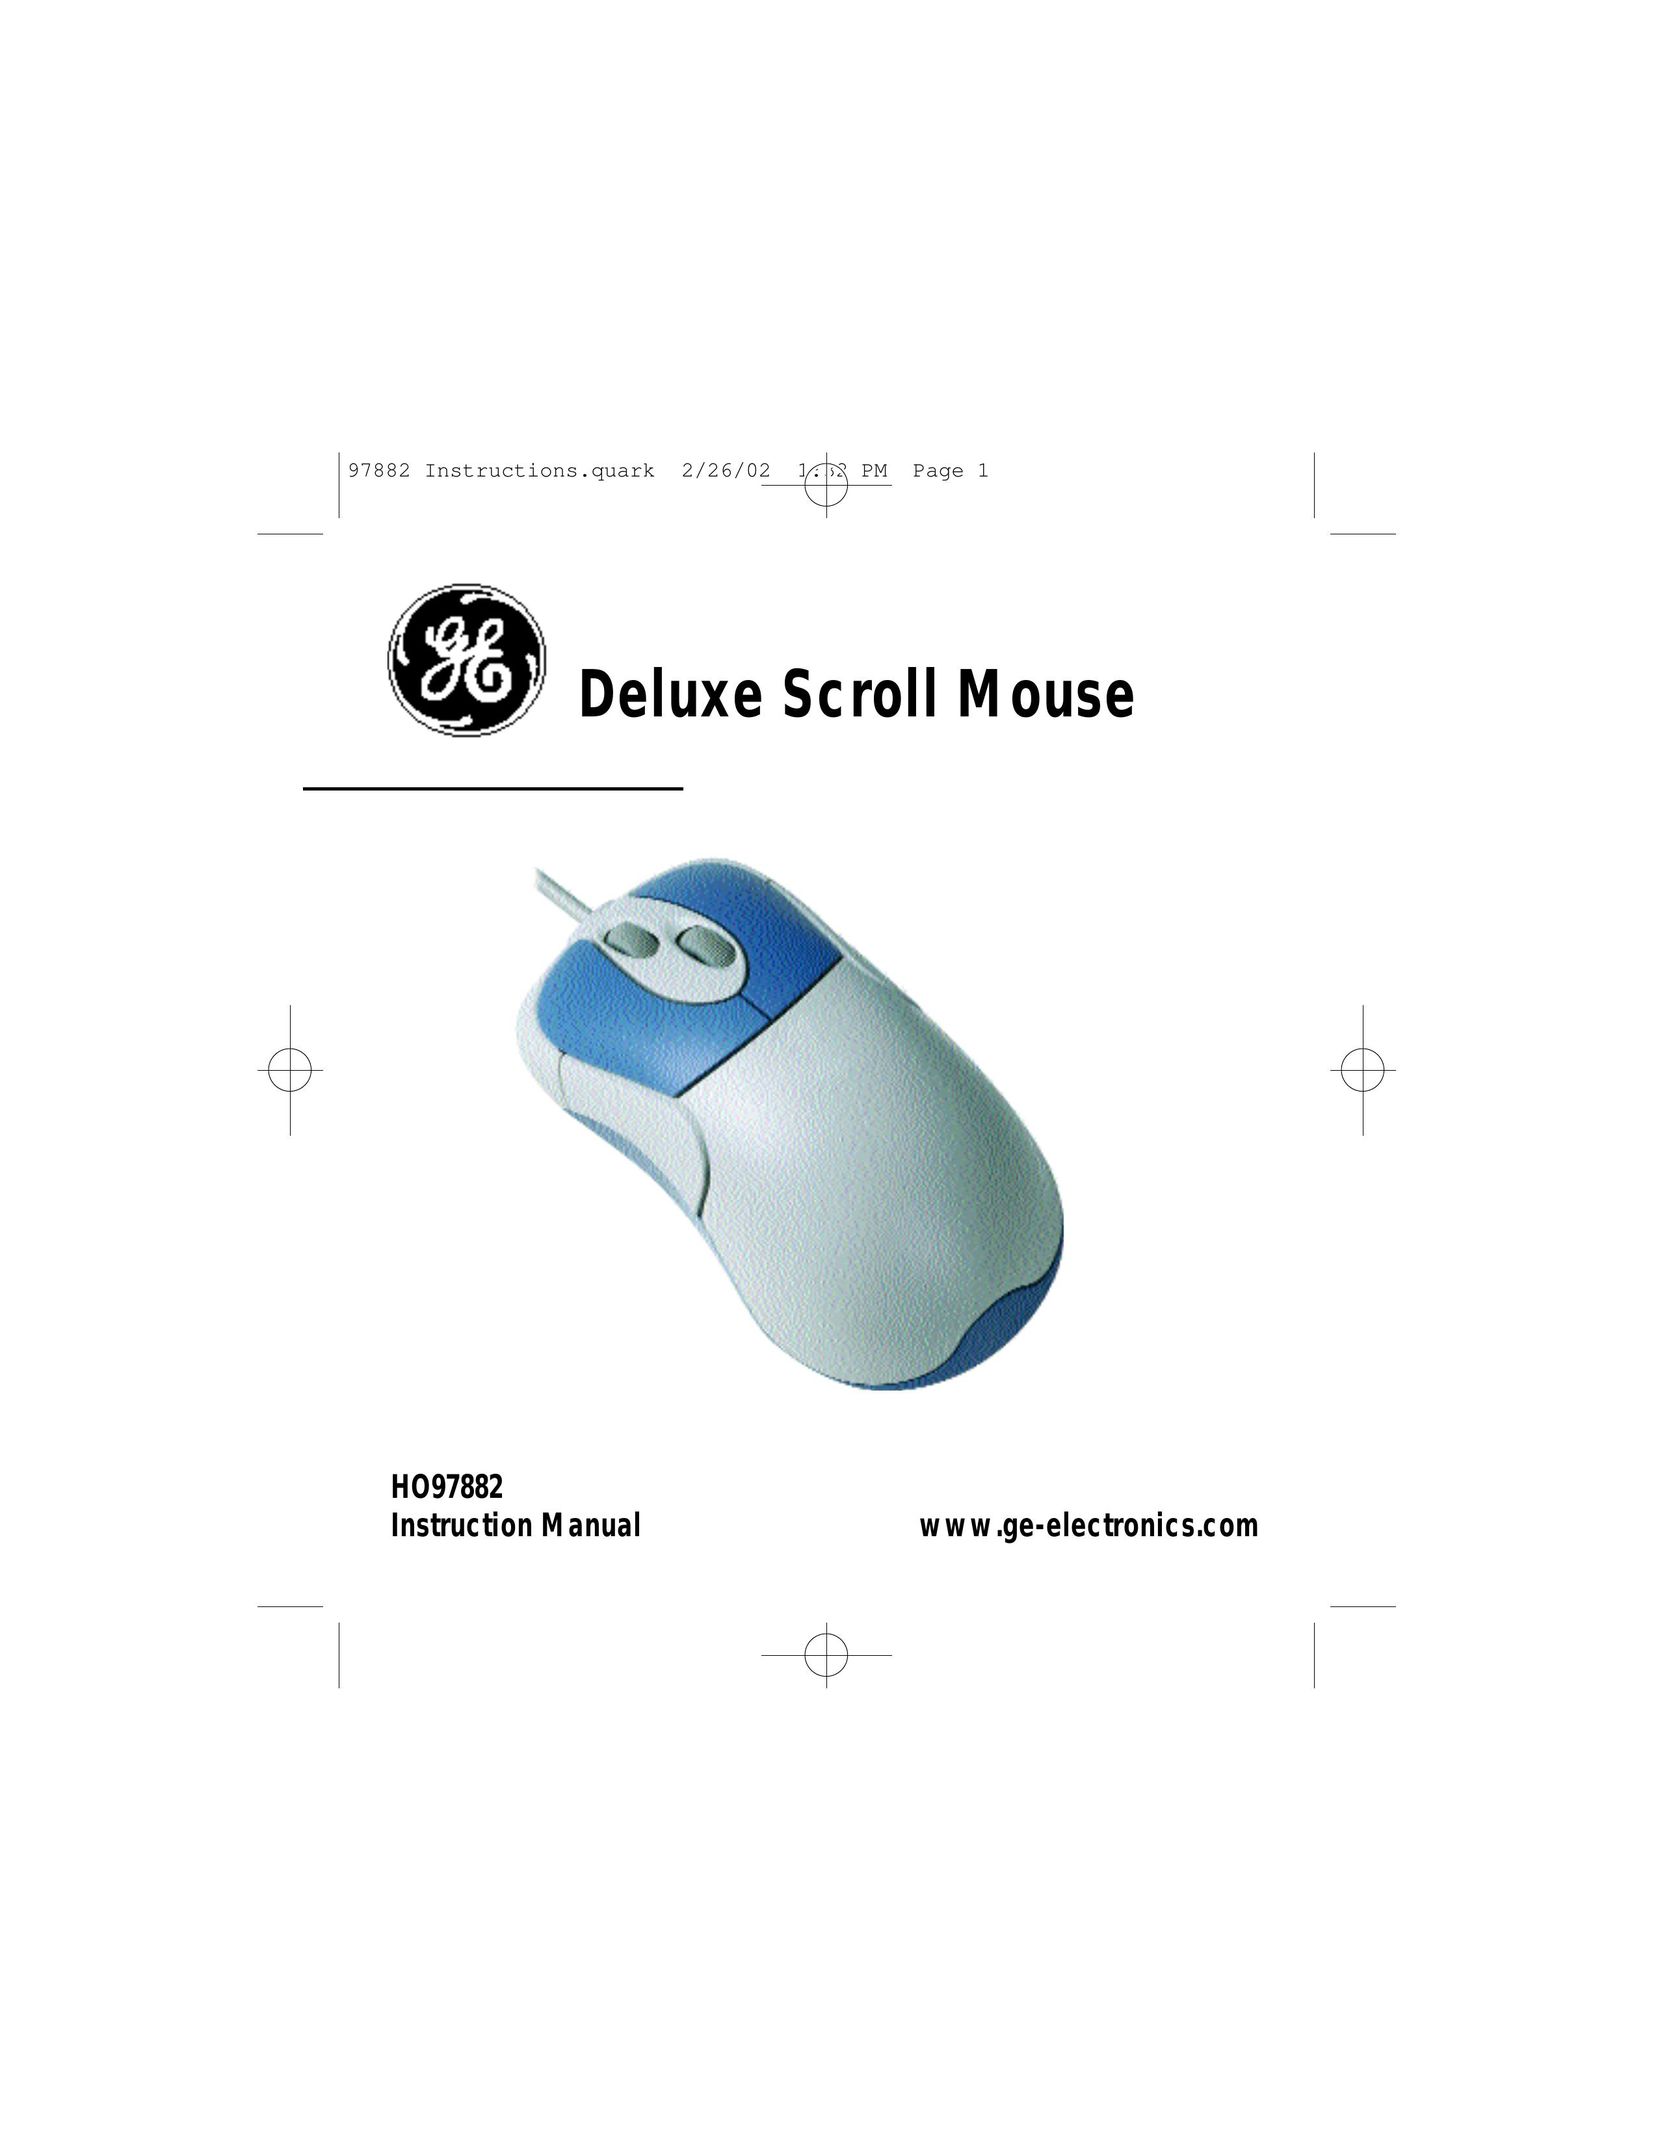 GE HO97882 Mouse User Manual